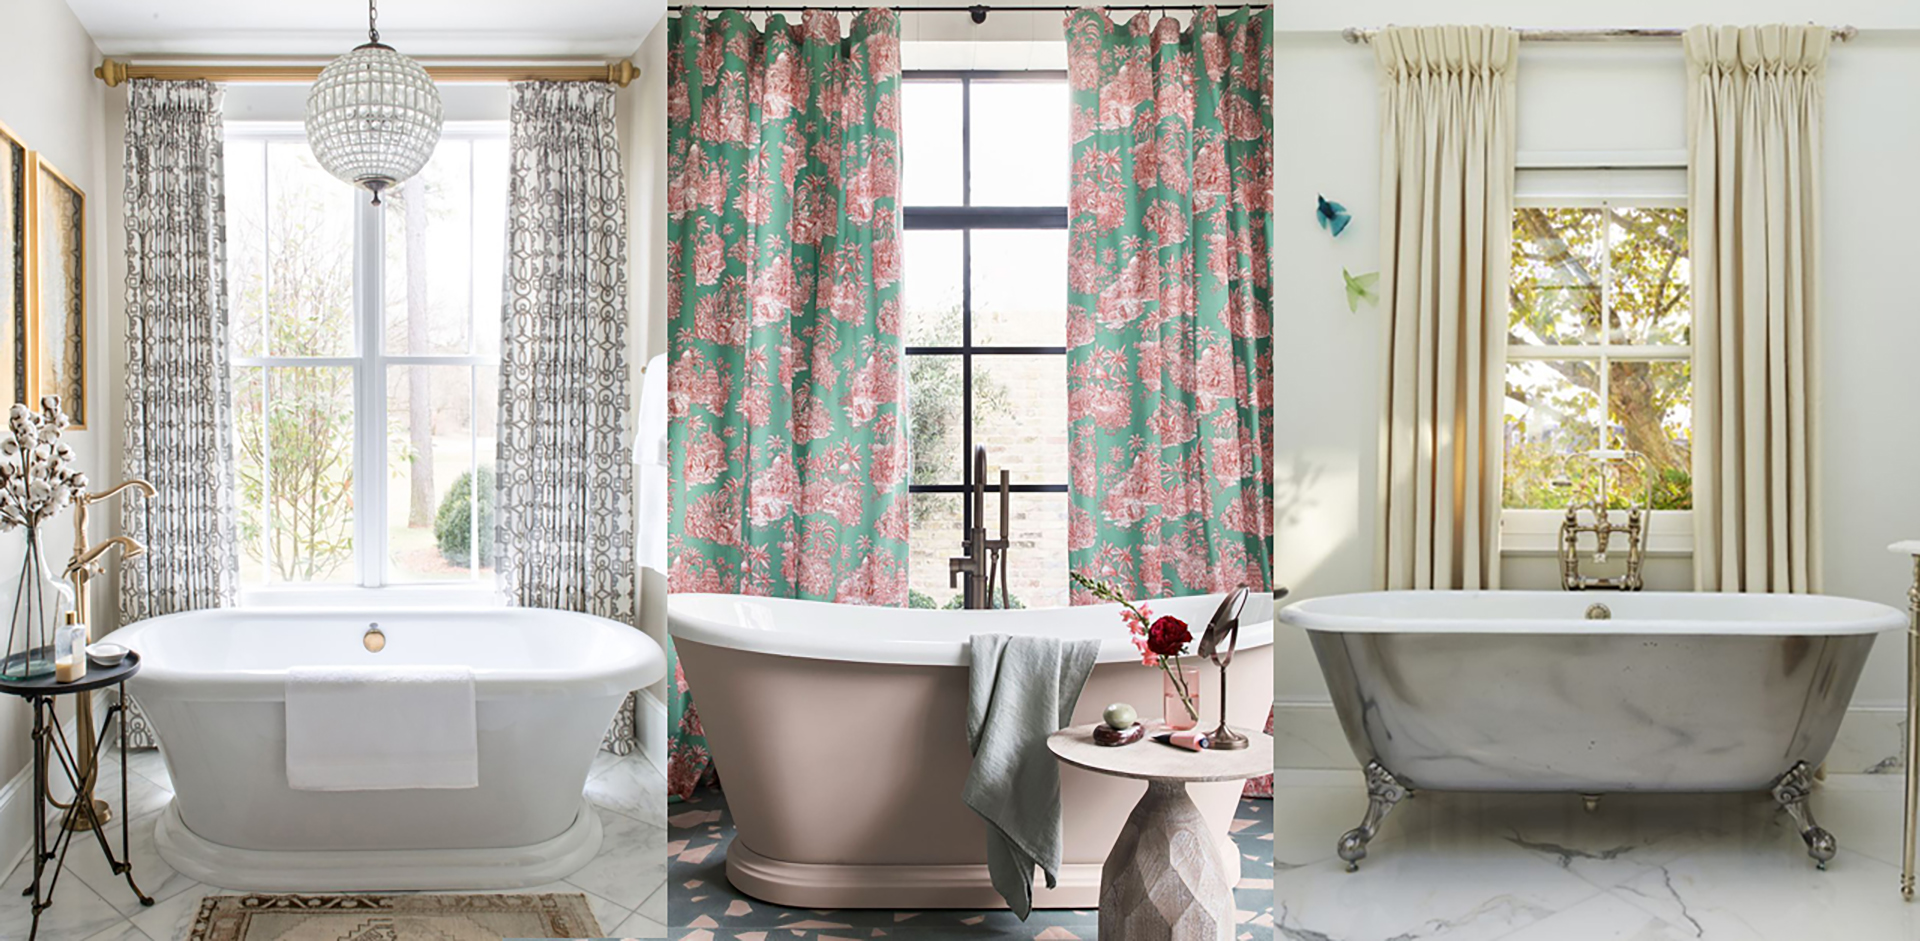 Bathroom curtain ideas 18 elegant washroom drapery styles   Homes ...